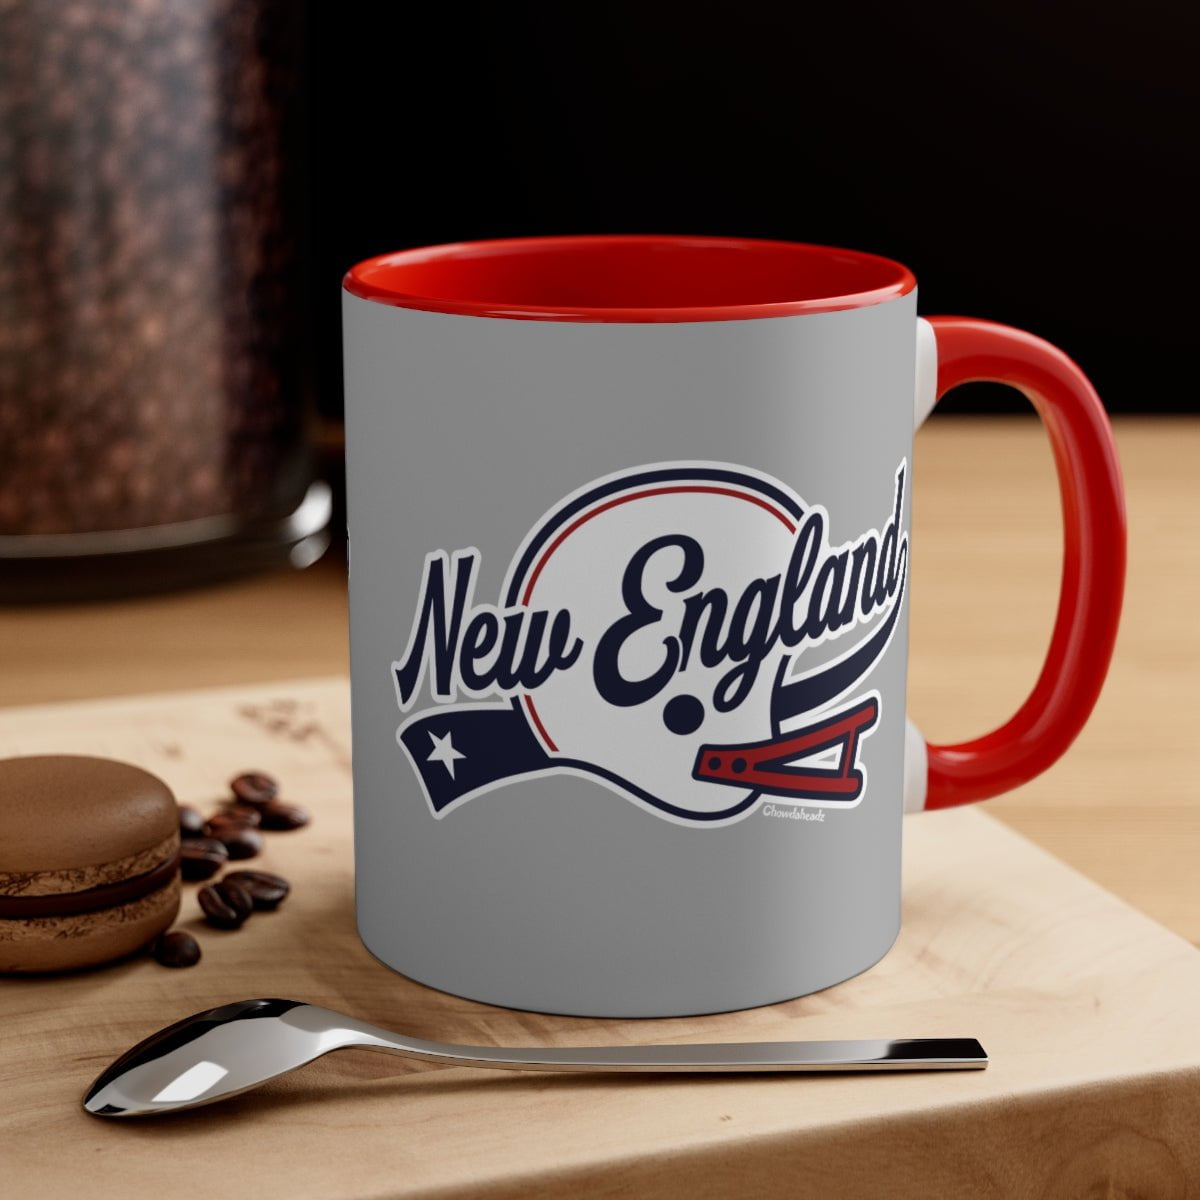 New England Script Accent Coffee Mug, 11oz - Chowdaheadz